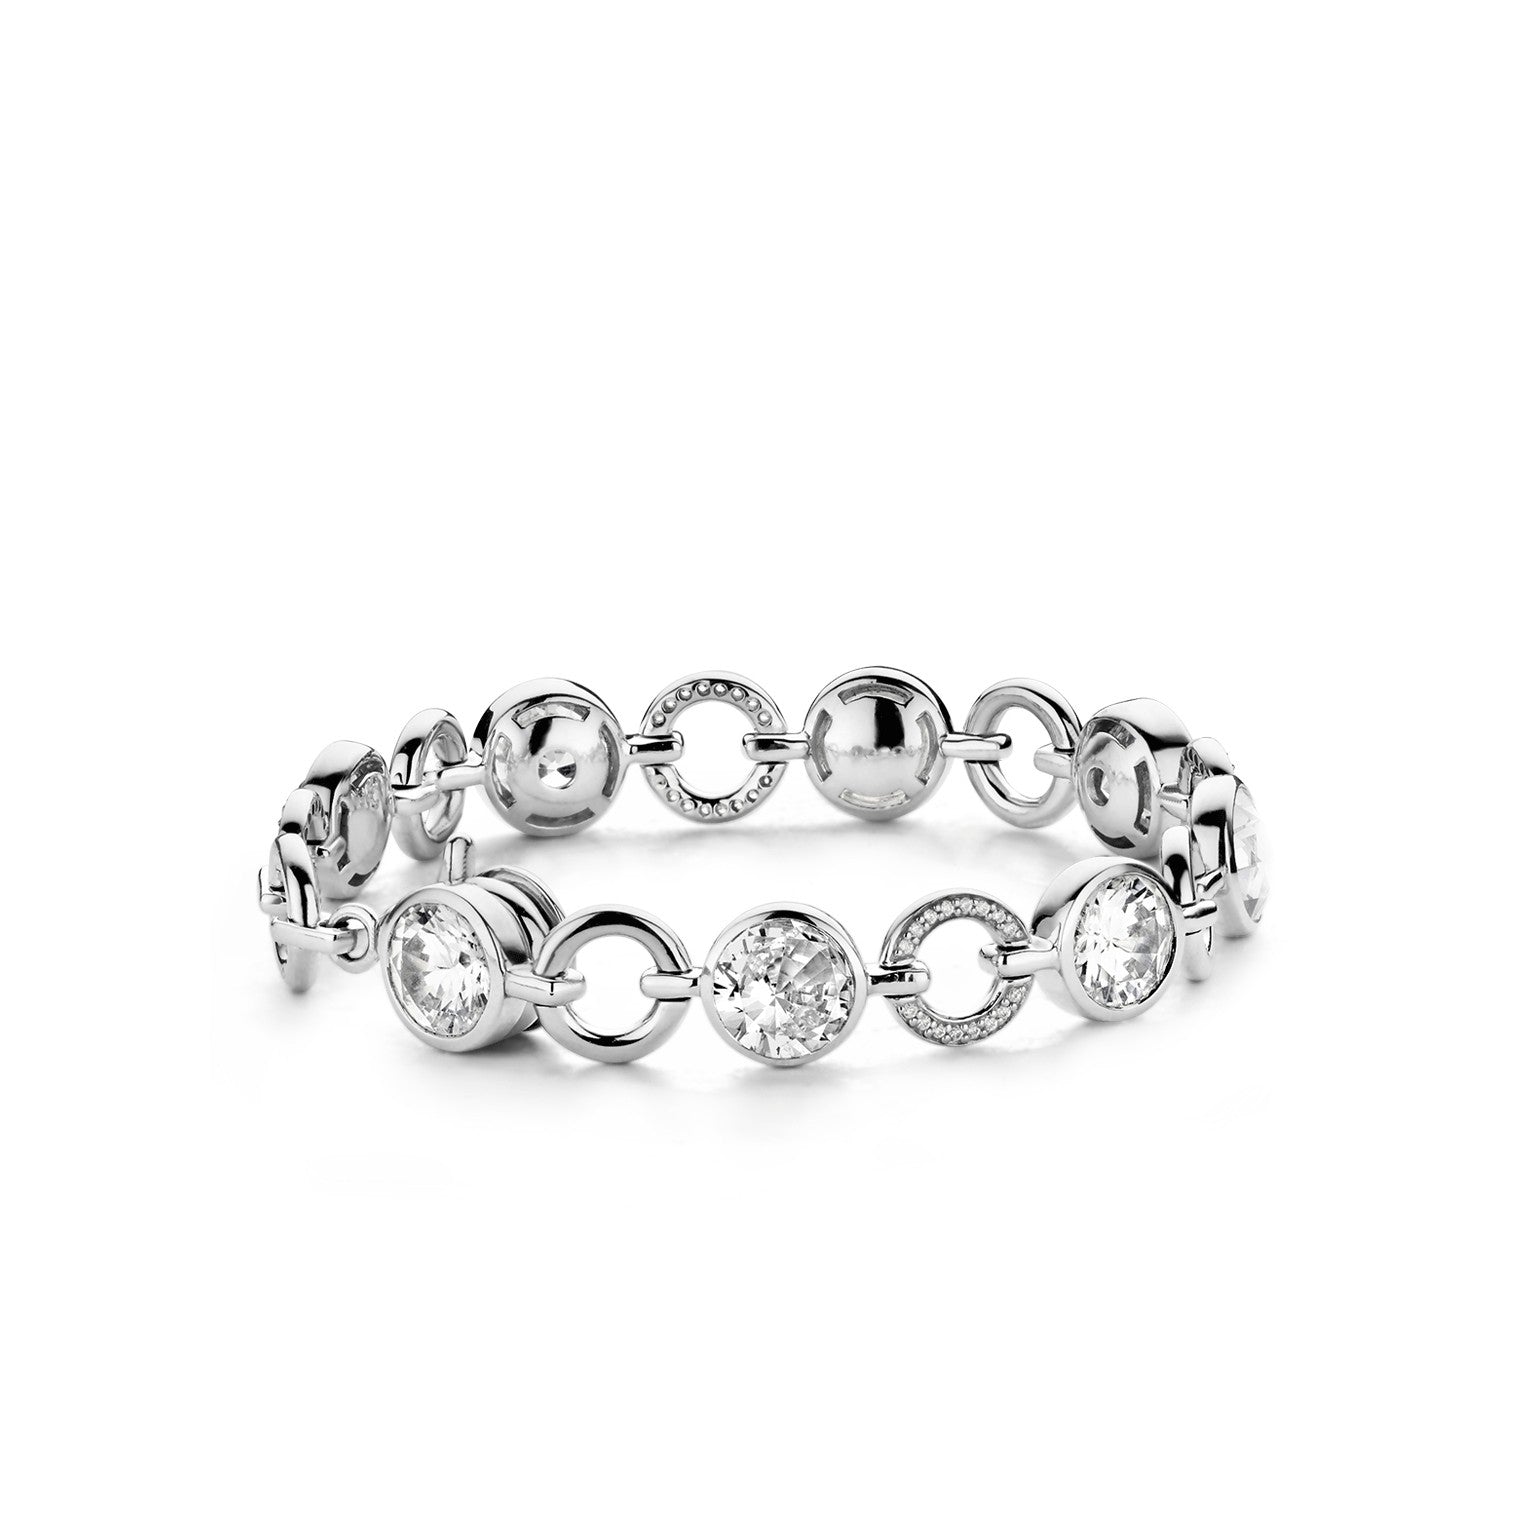 TI SENTO Sterling Silver Circular Link Bracelet with Bezel Set Cubic Zirconias